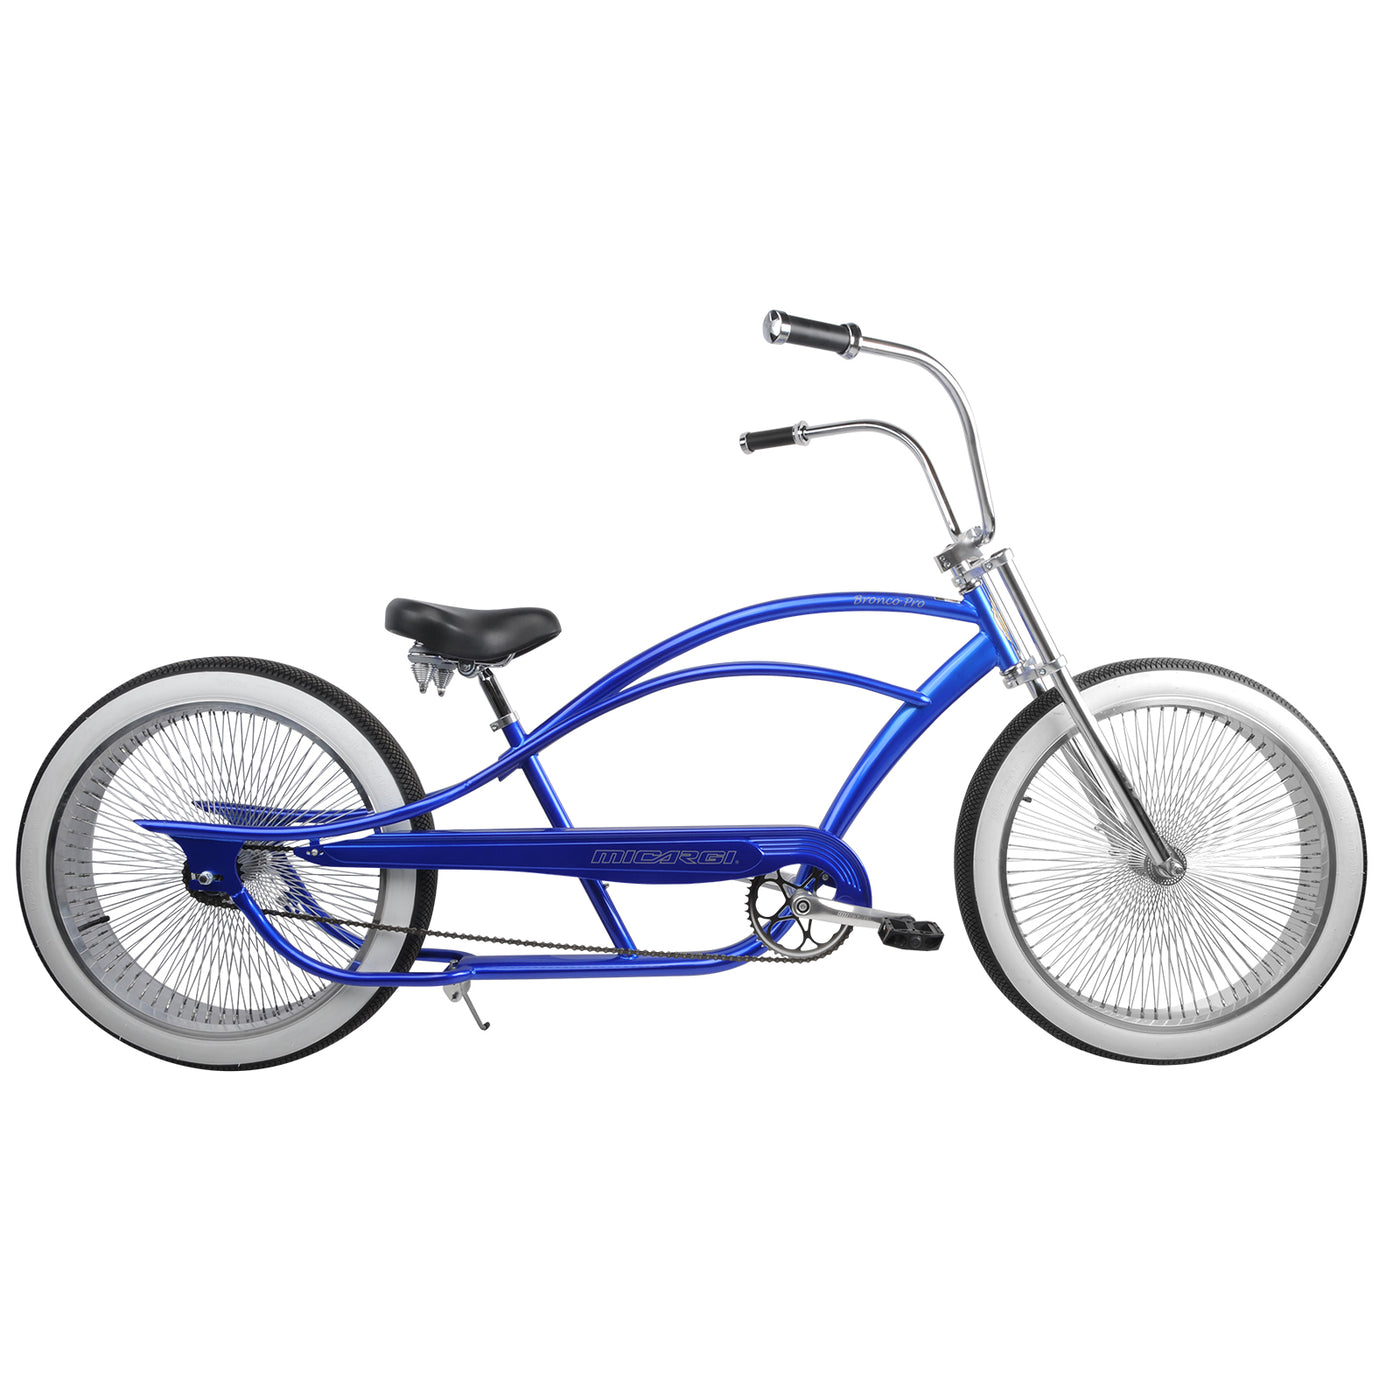 Micargi Bronco Pro Stretch Cruiser Bike